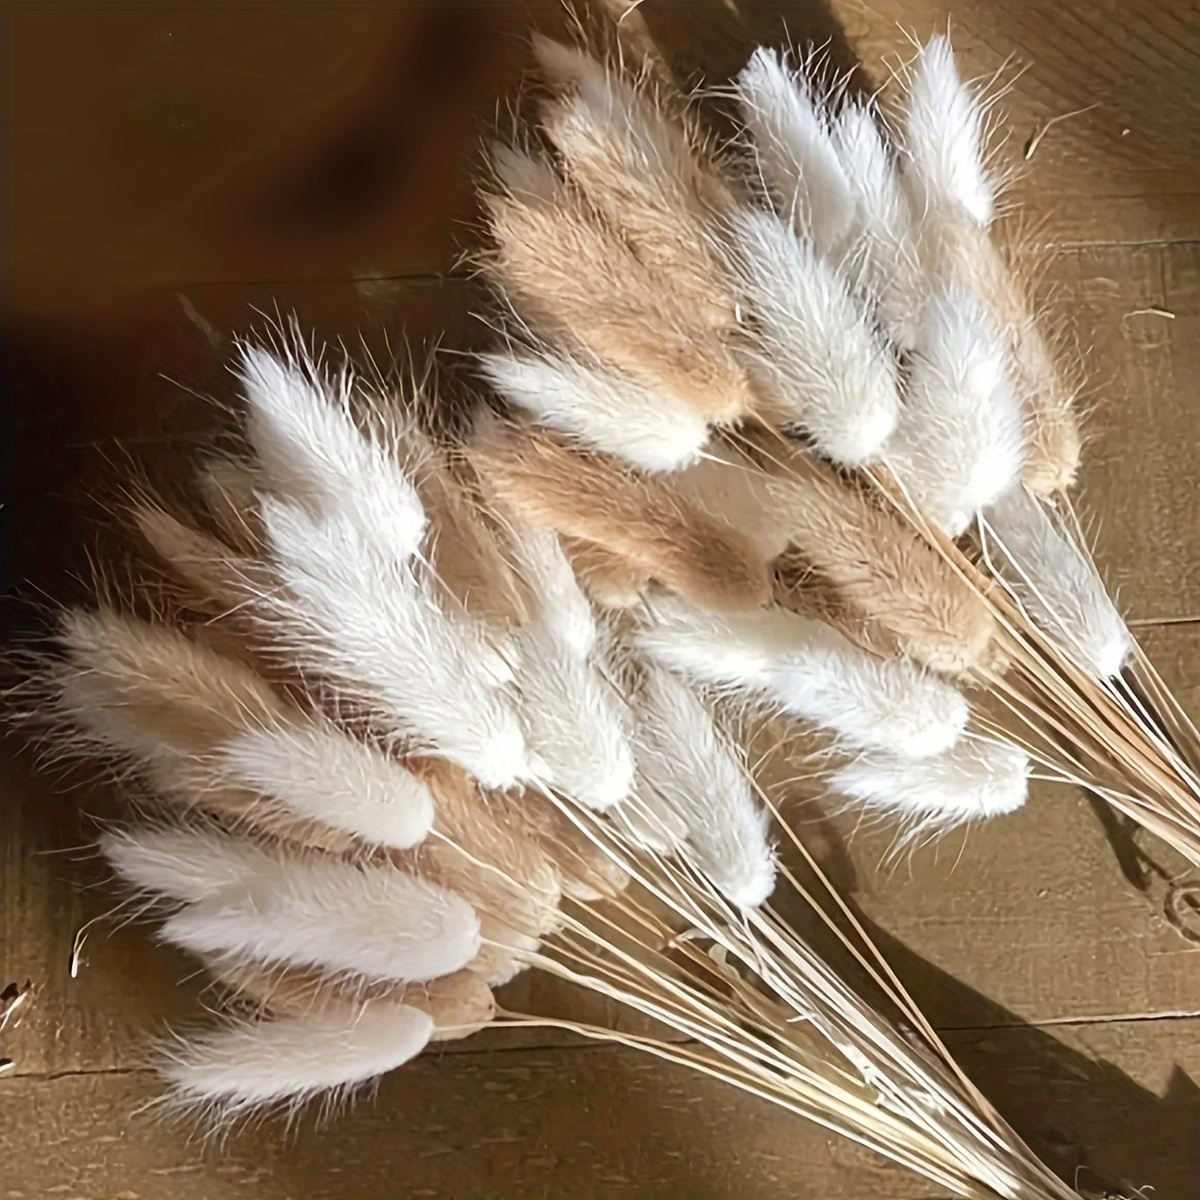 

60-piece Natural Dried Lagurus Ovatus - Bunny Tail Grass Bouquet For Home Decor, Vase Fillers, Weddings, Parties - No Power Fluffy Floral Arrangement Supplies